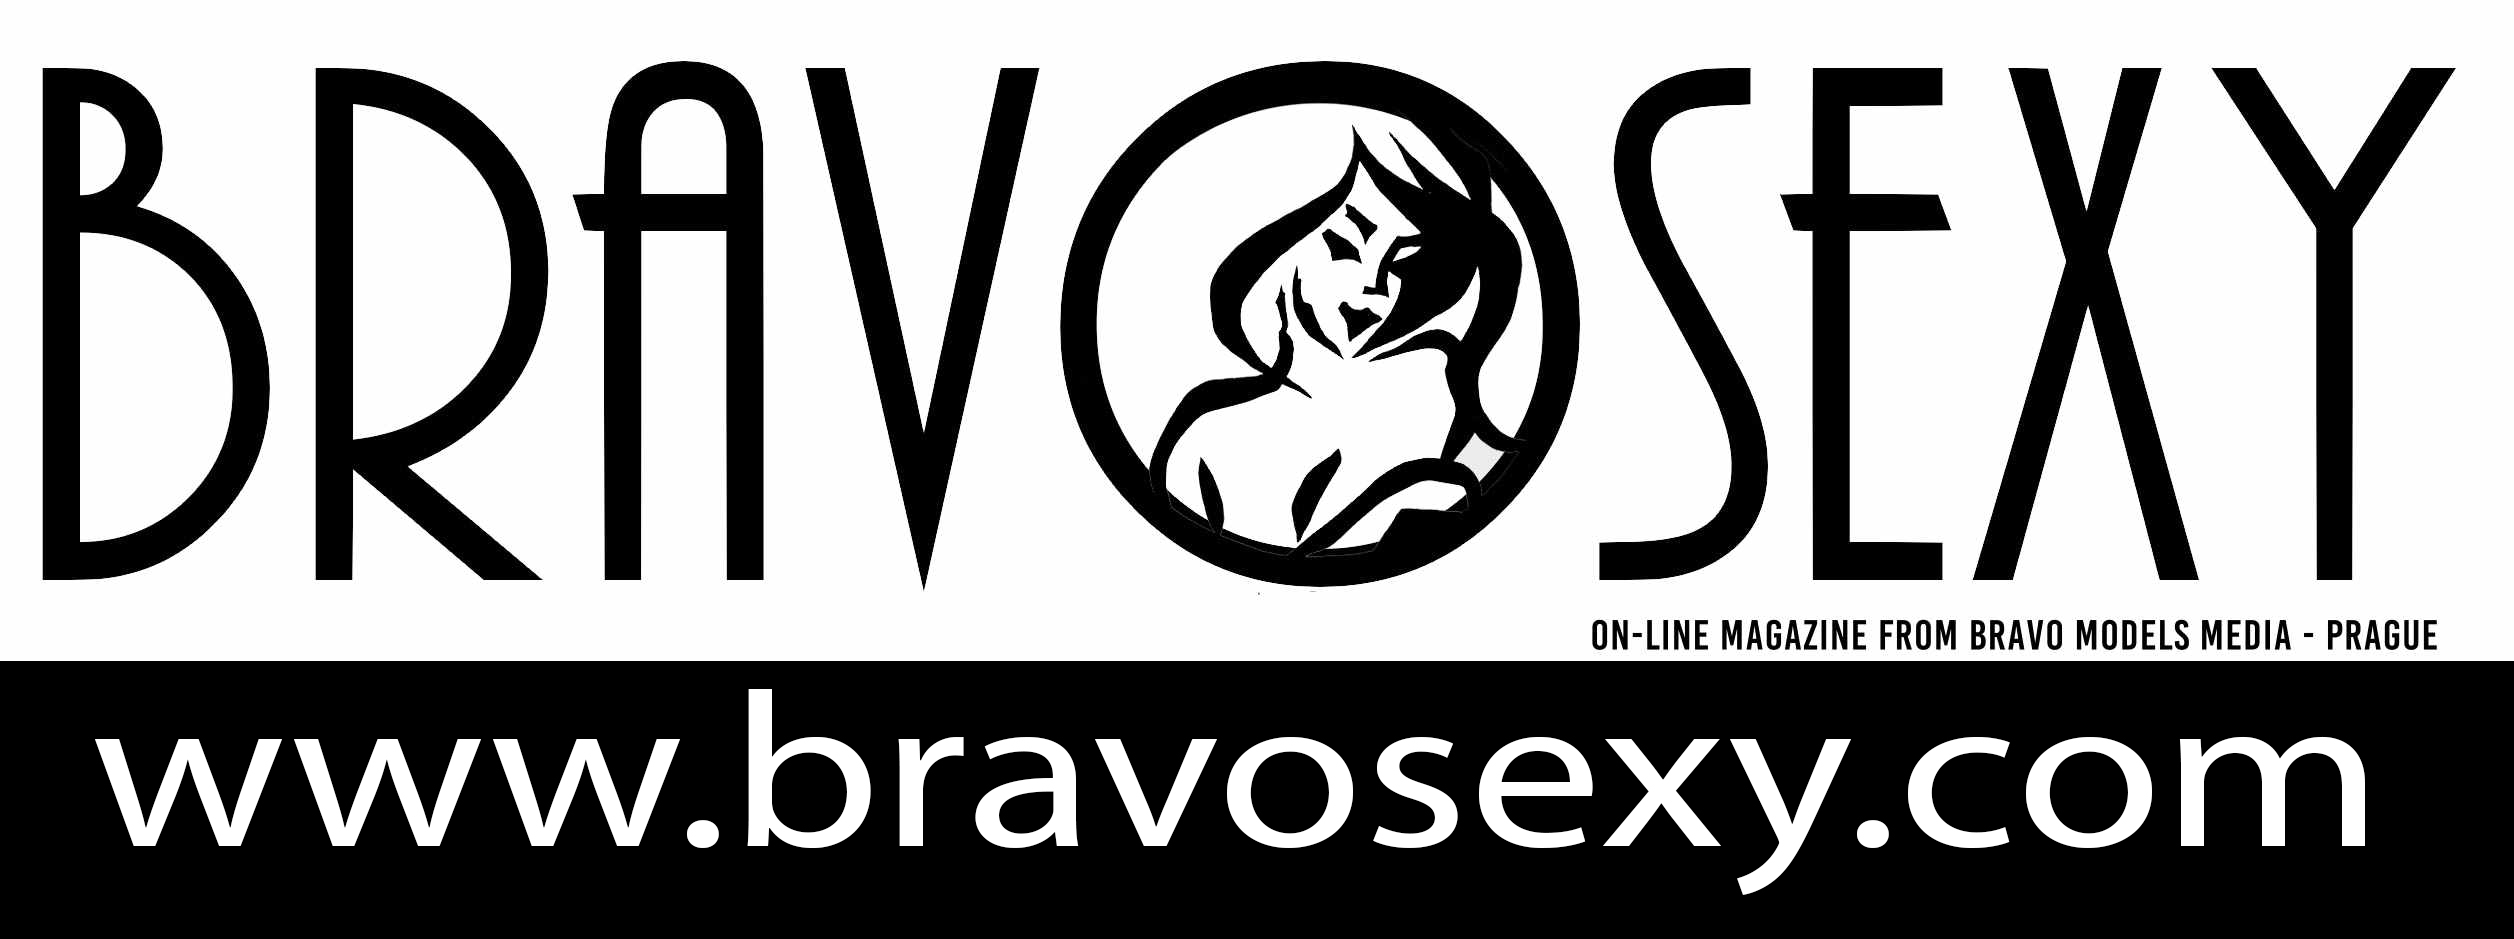 BravoSexy contact form